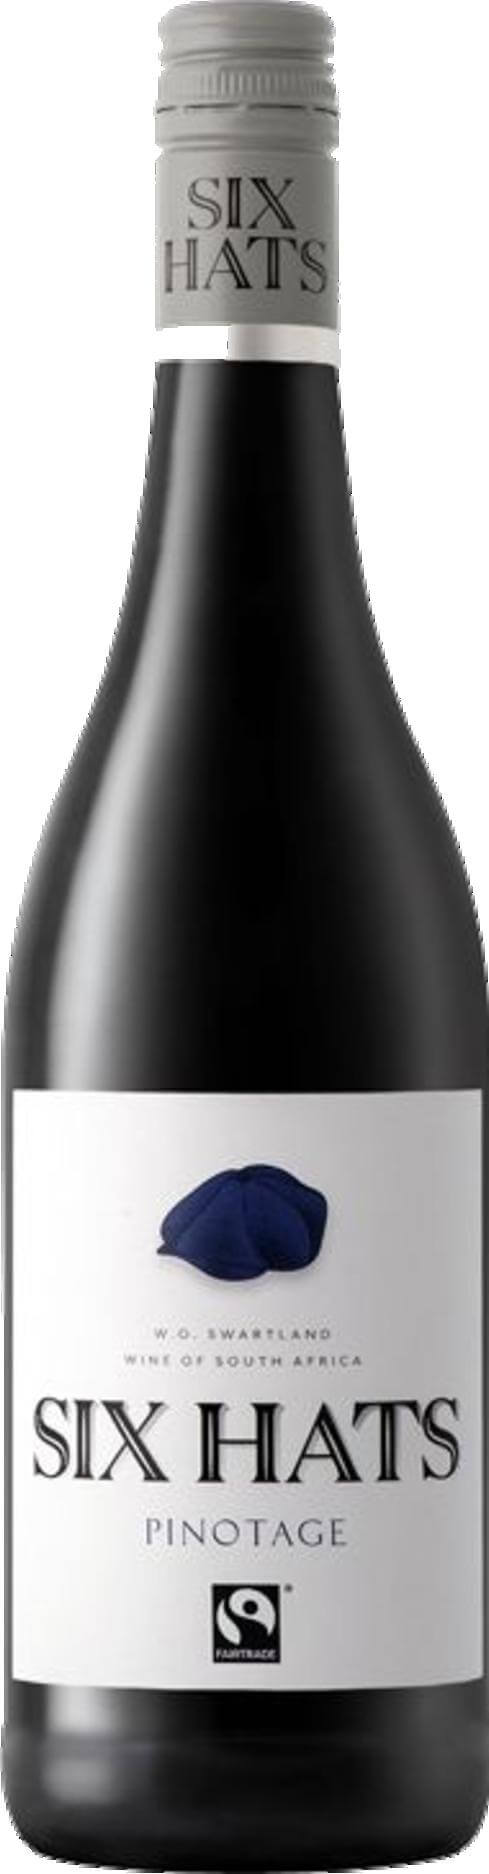 Piekenierskloof Six Hats Pinotage (Rotwein, Südafrika, Western Cape) |  Curry Premium Wines oHG